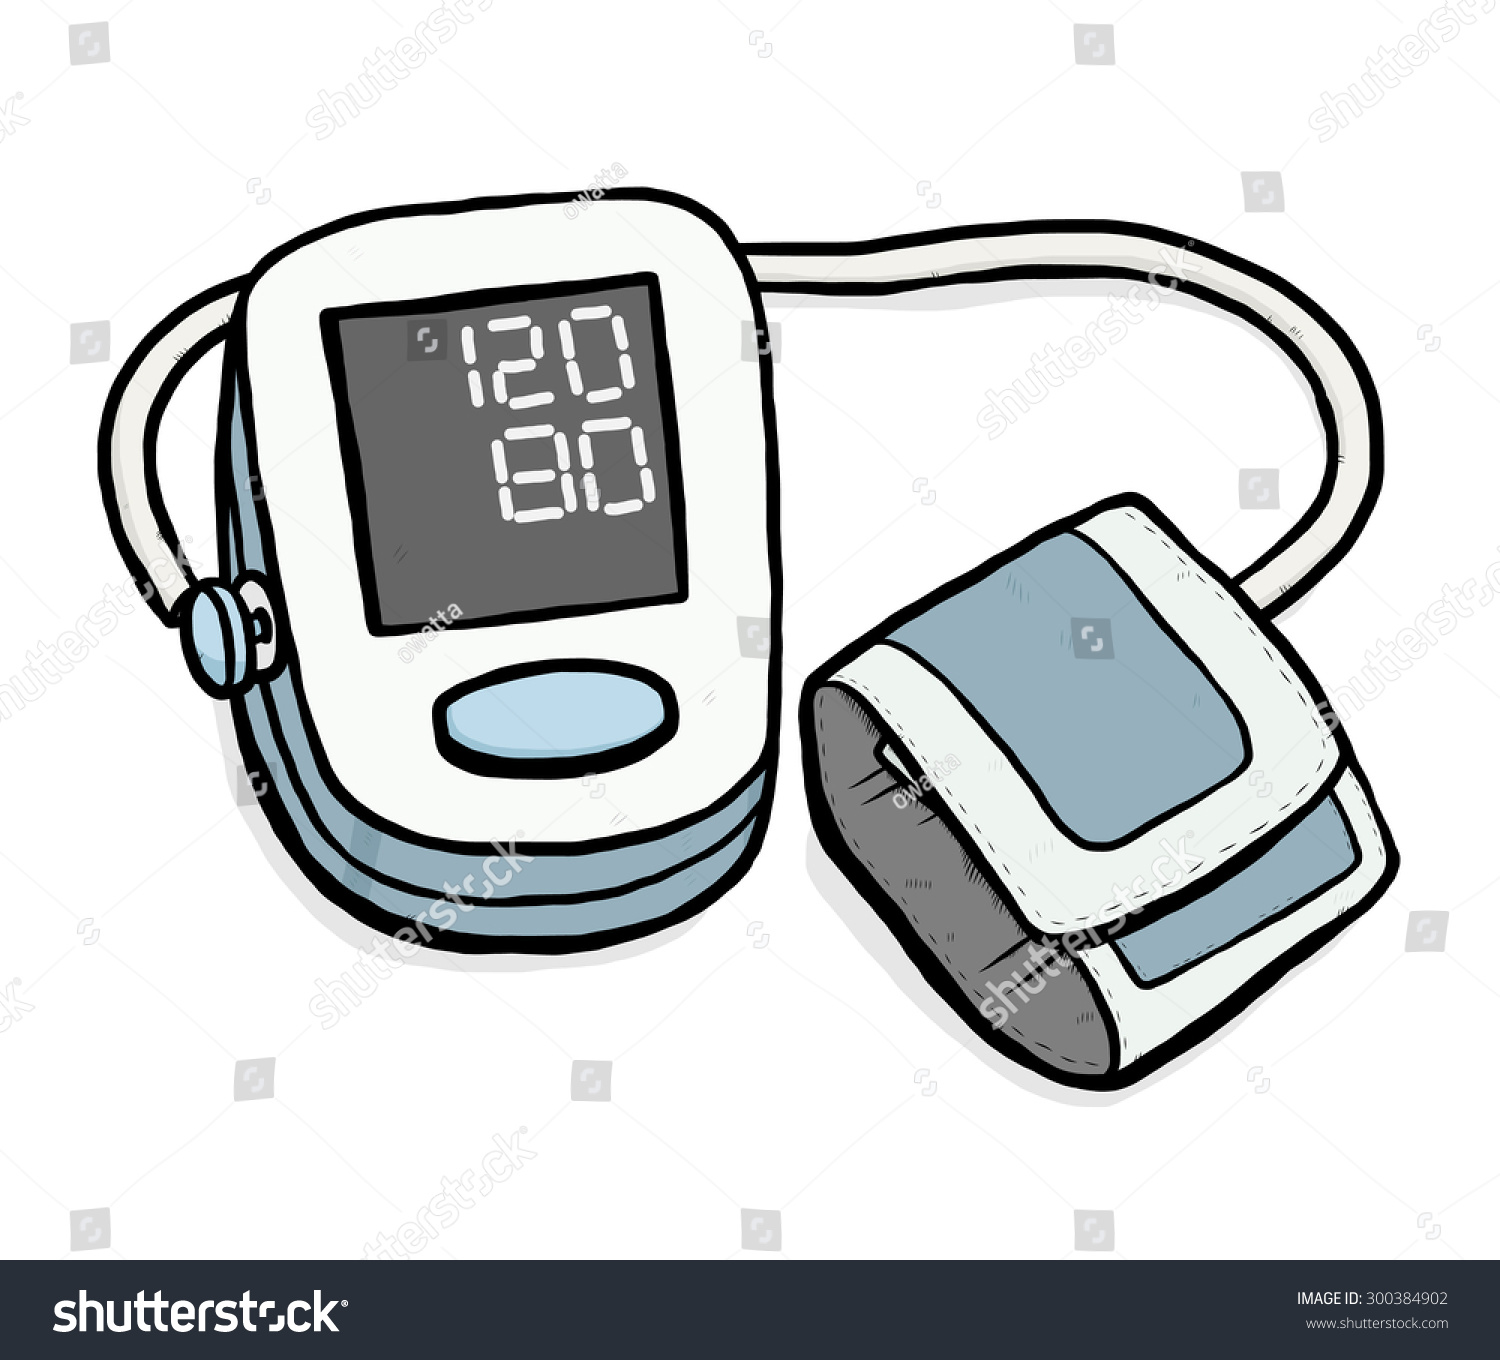 free clipart of blood pressure cuff - photo #35